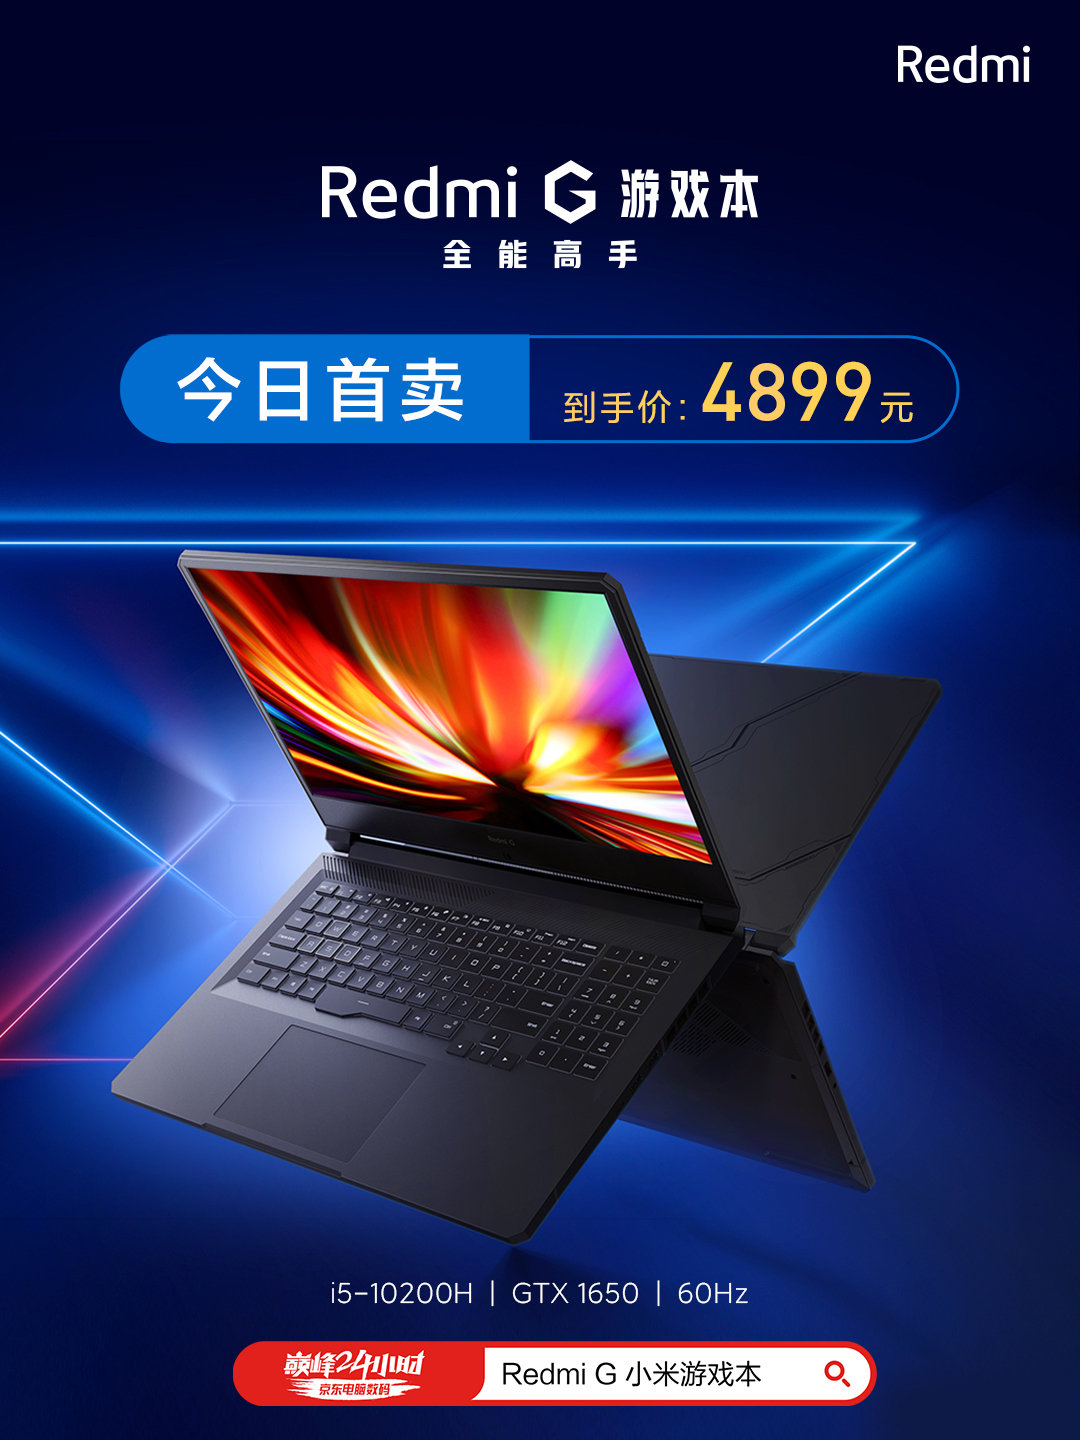 Redmi G游戏本今日首卖，限时4899元起售